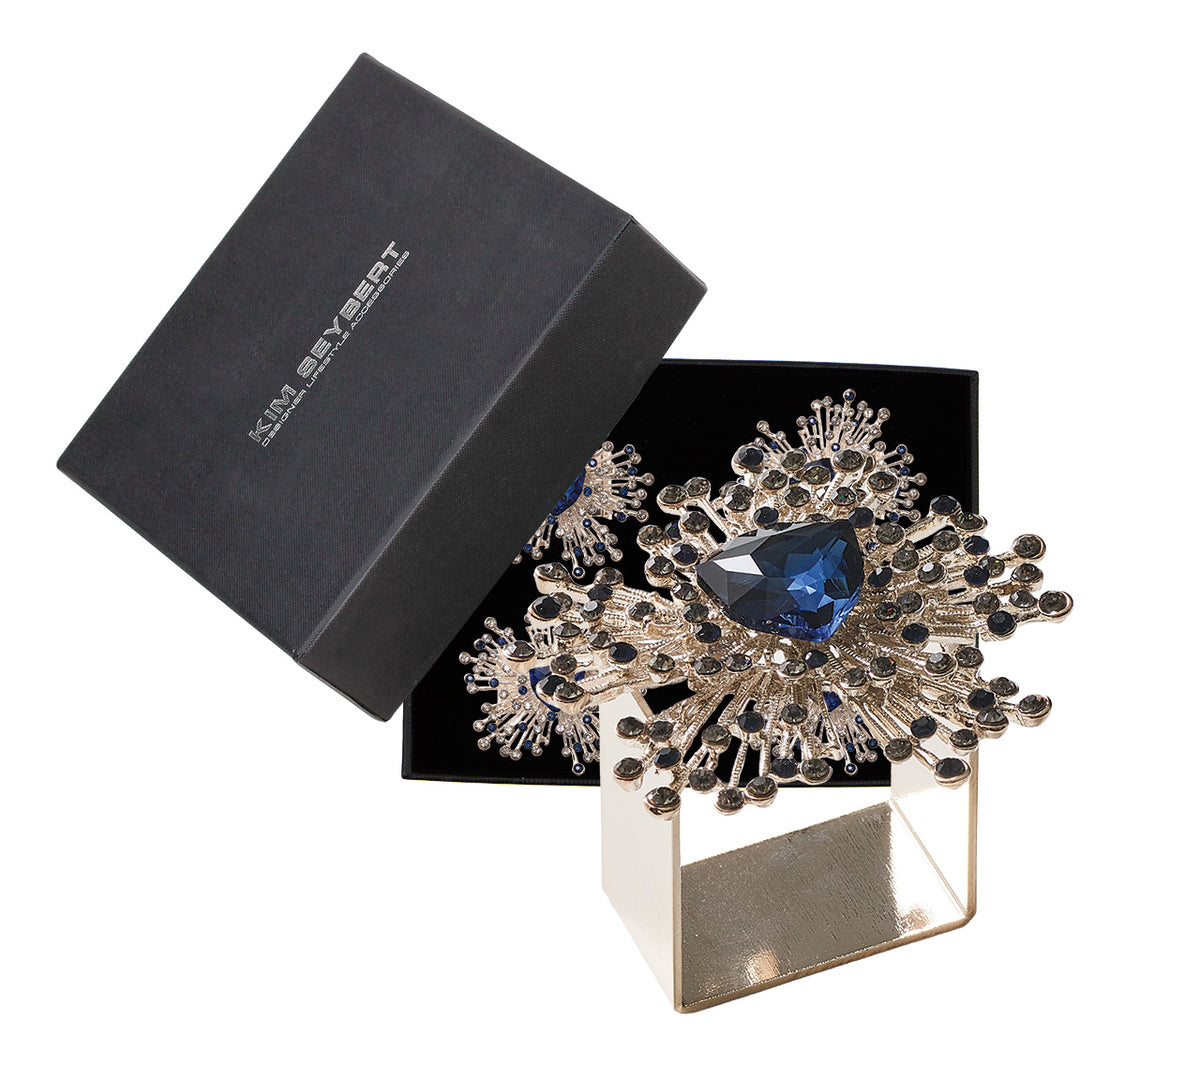 Gem Burst Napkin Ring in Navy & Silver, Set of 4 in a Gift Box